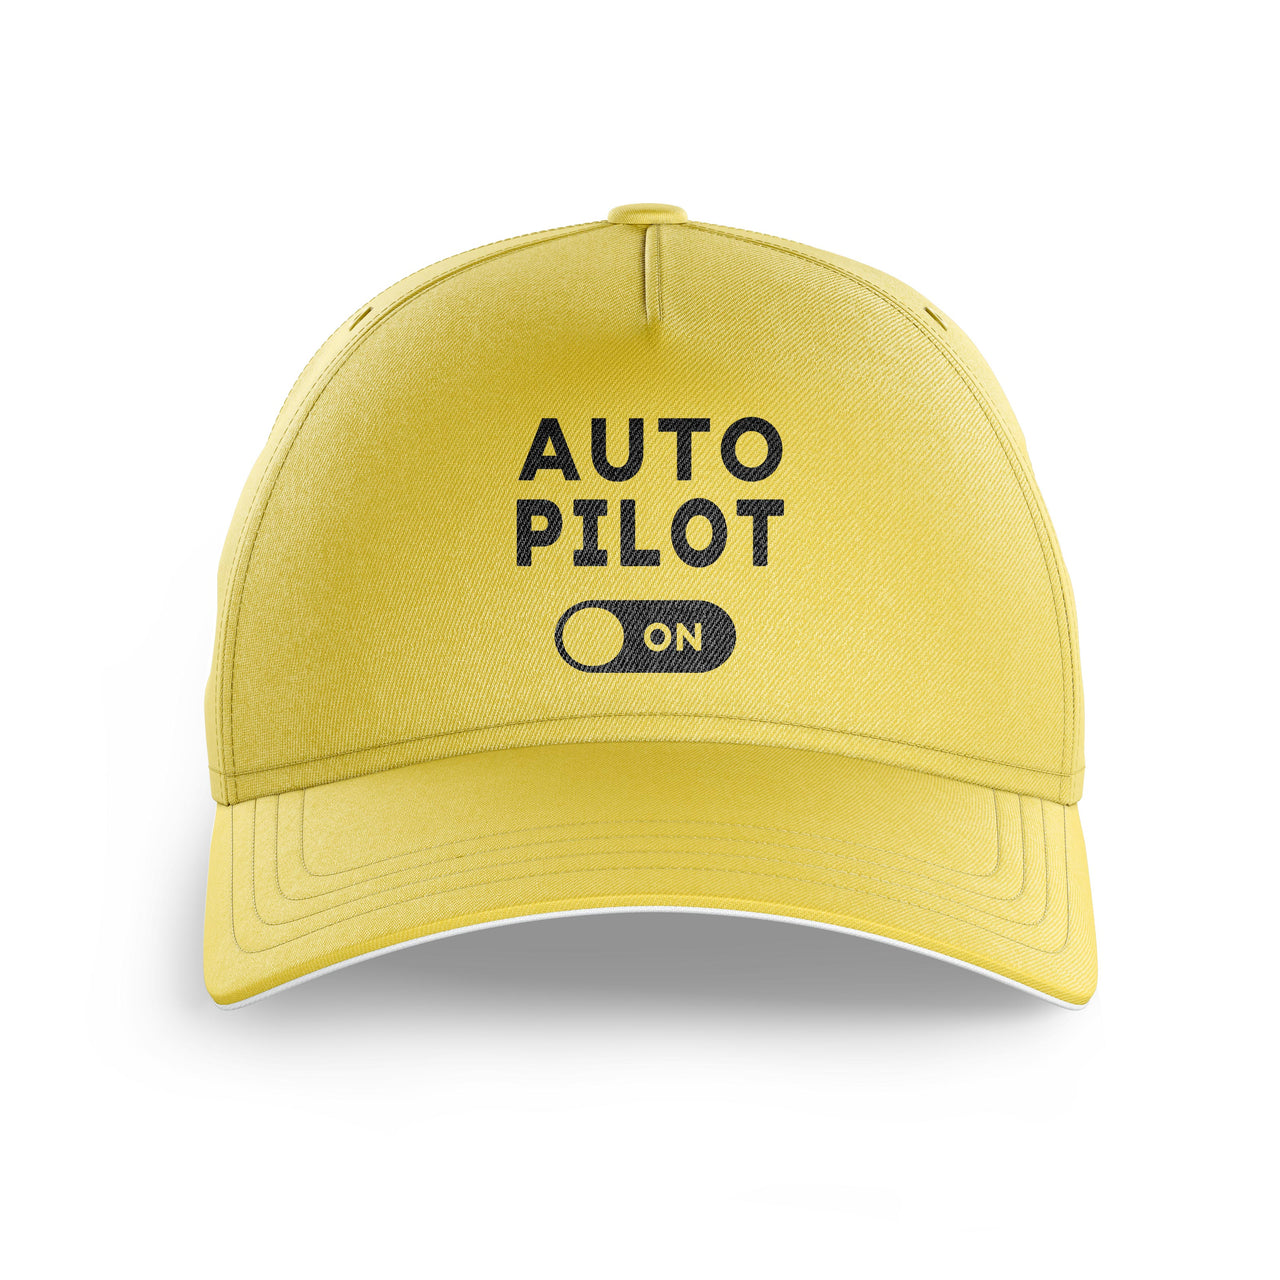 Auto Pilot ON Printed Hats